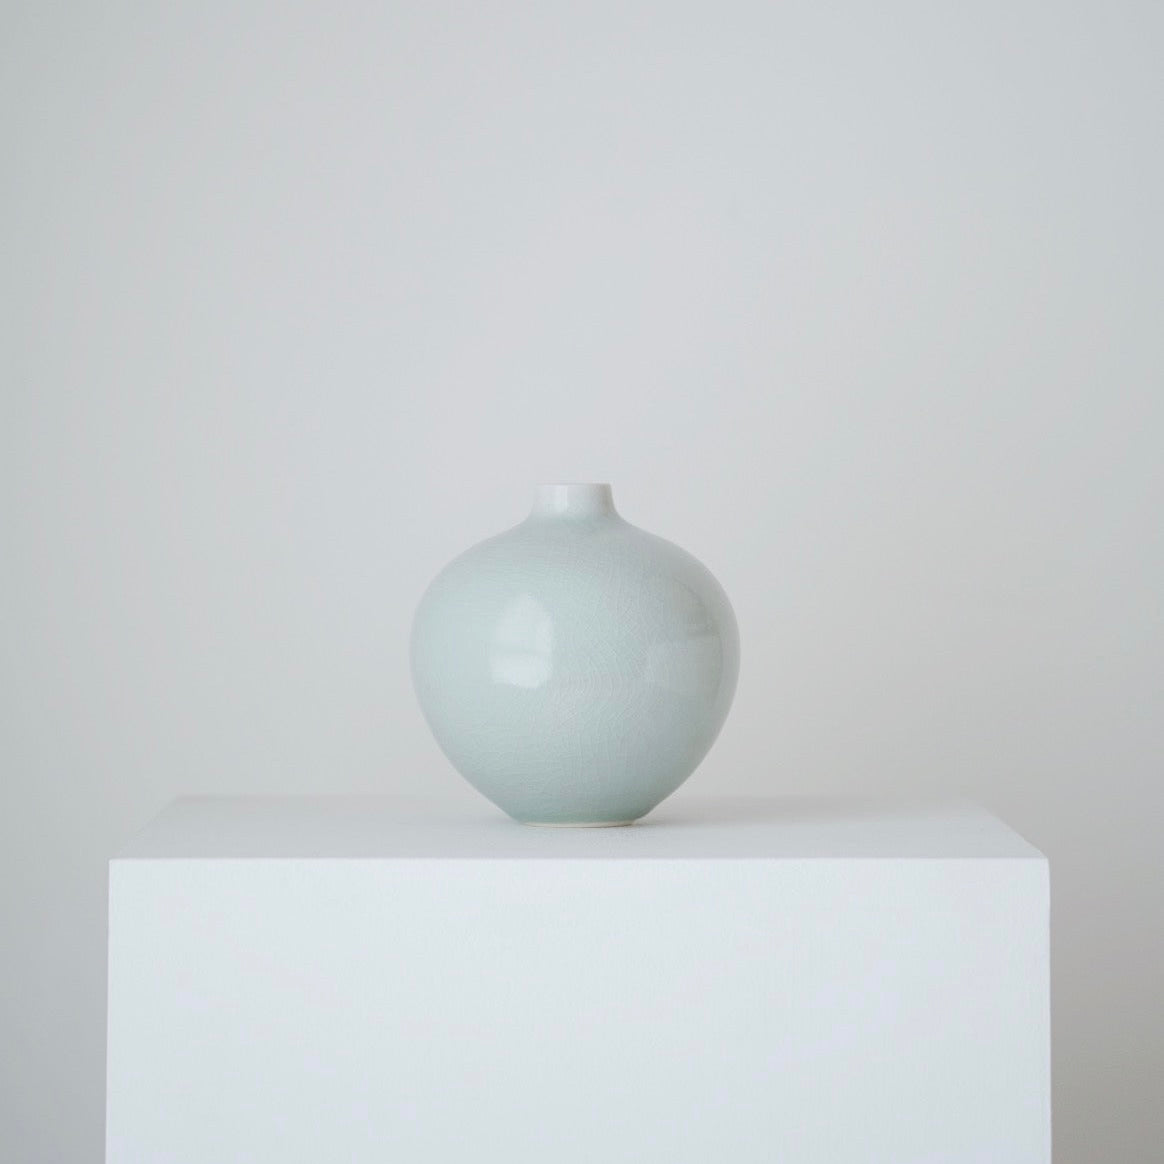 Light-Chungja(연청자) Vase - Small